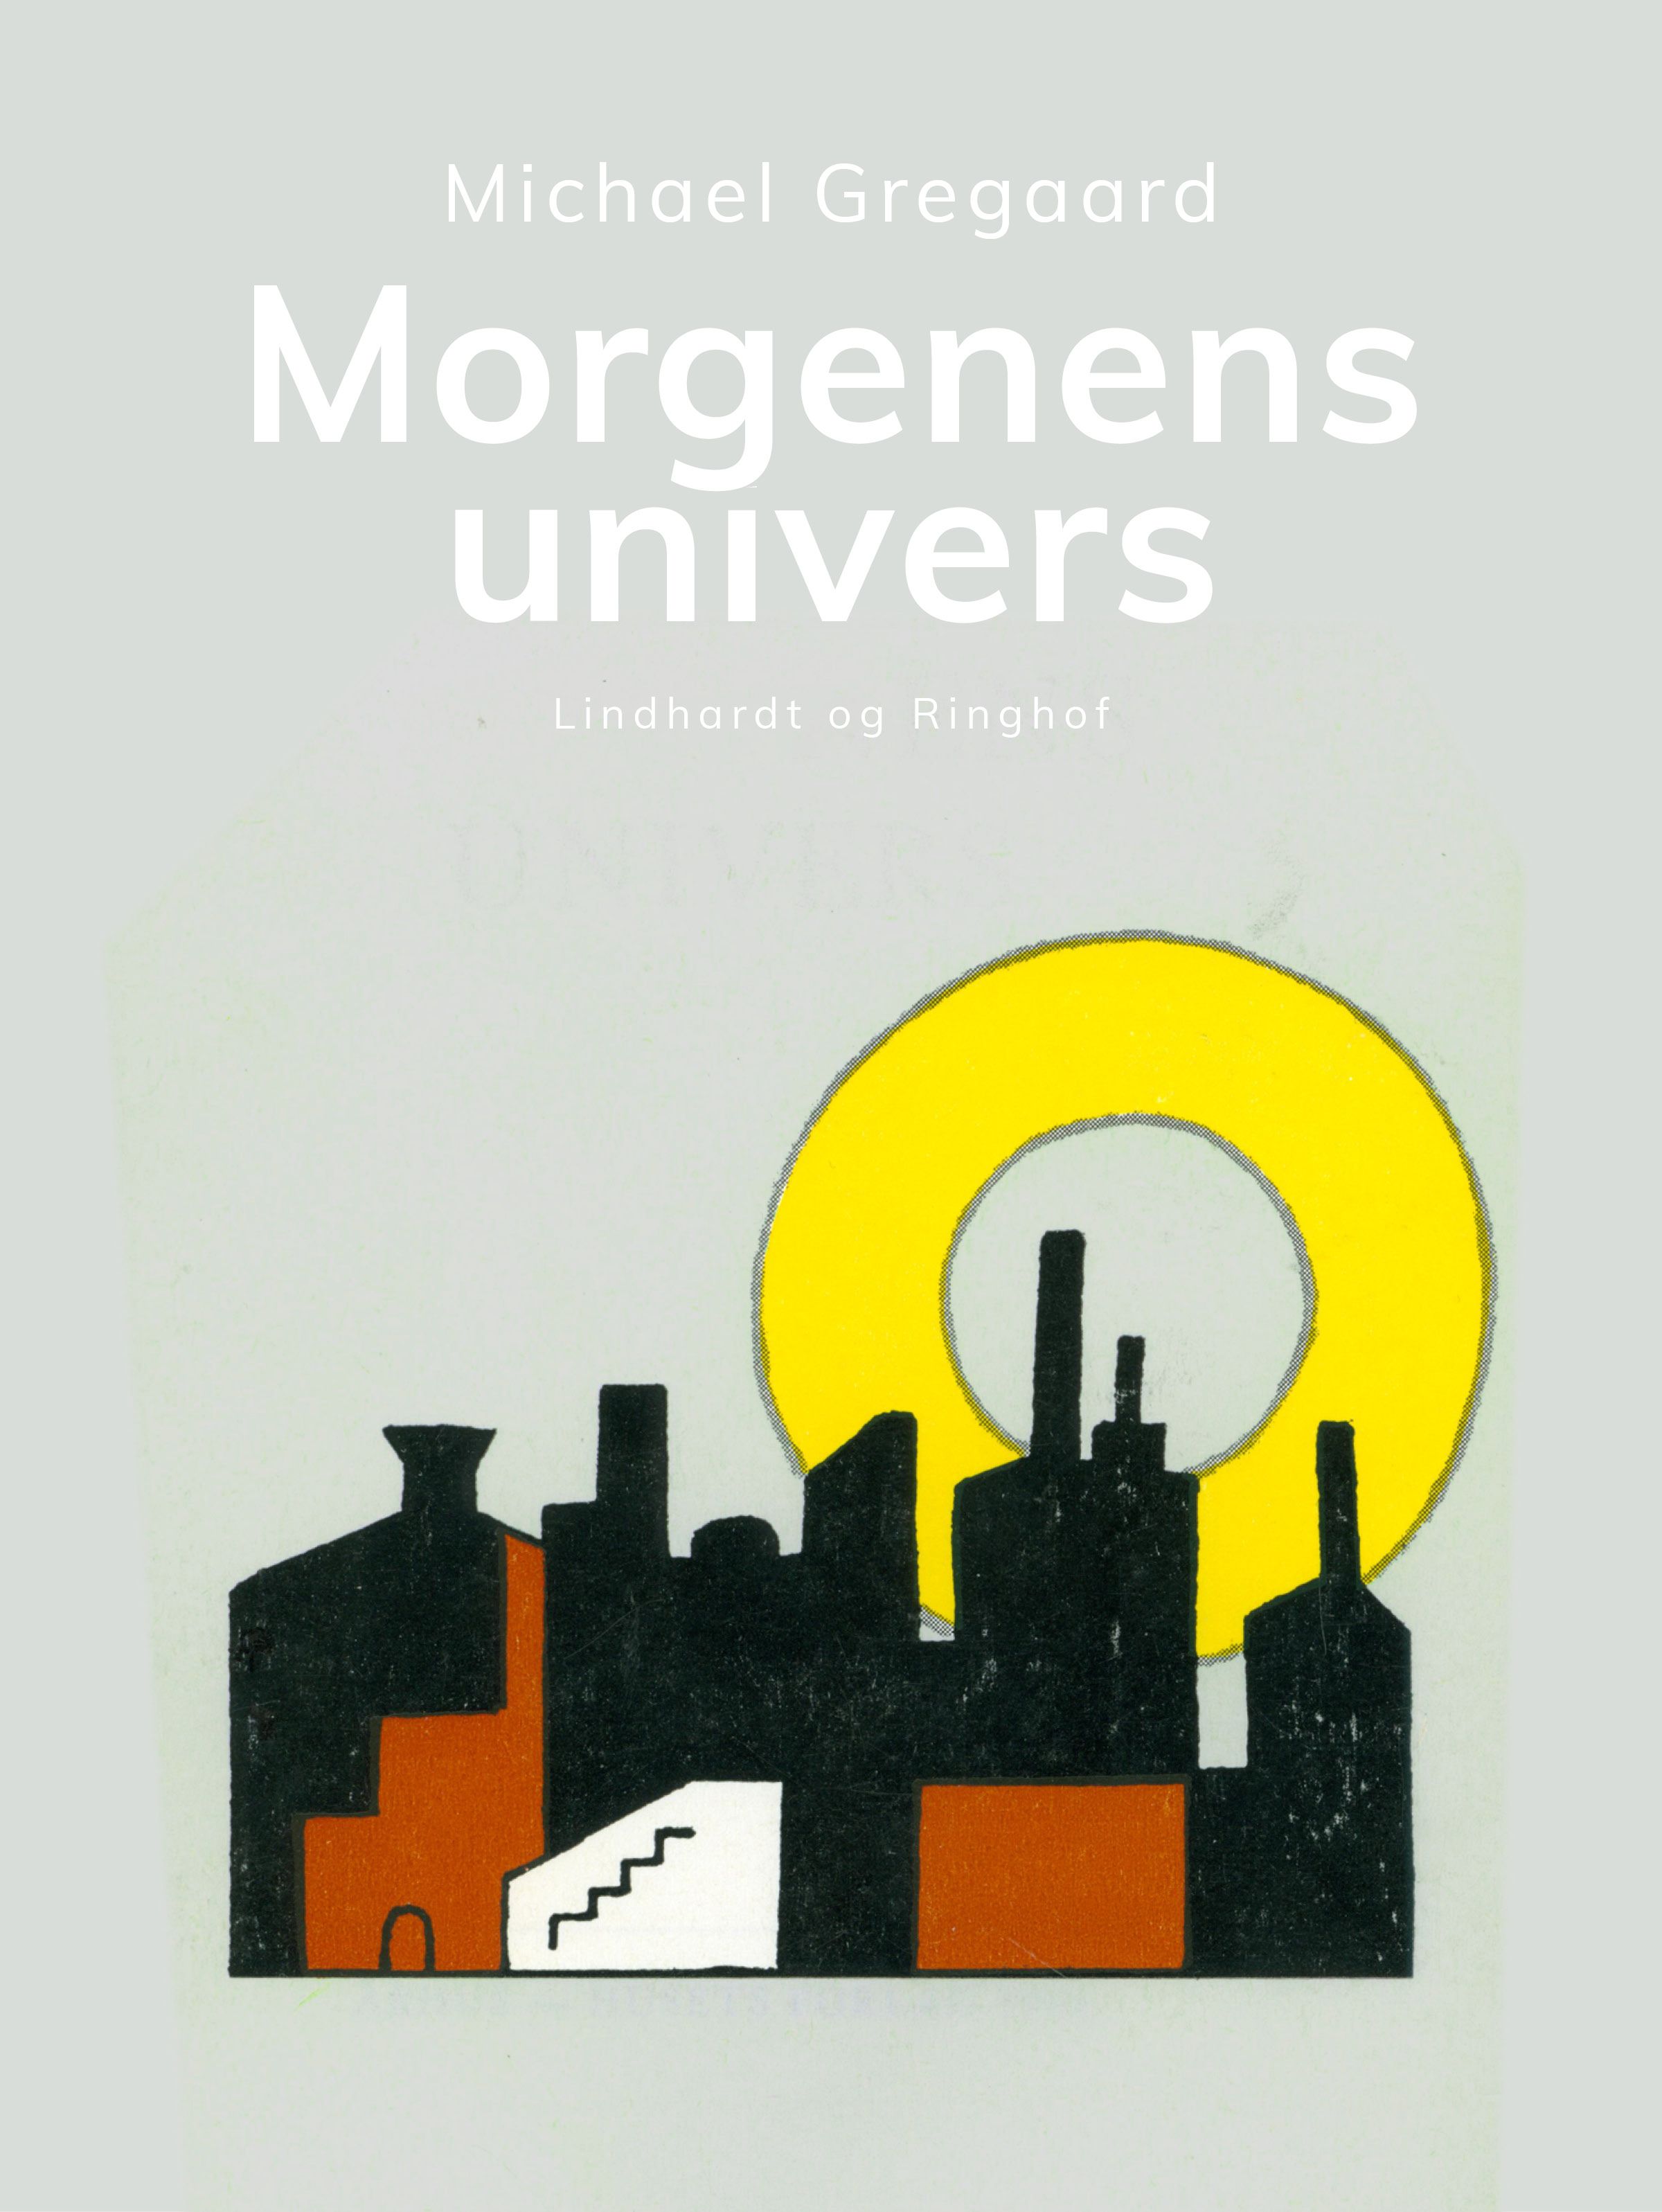 Morgenens univers, e-bog af Michael Gregaard